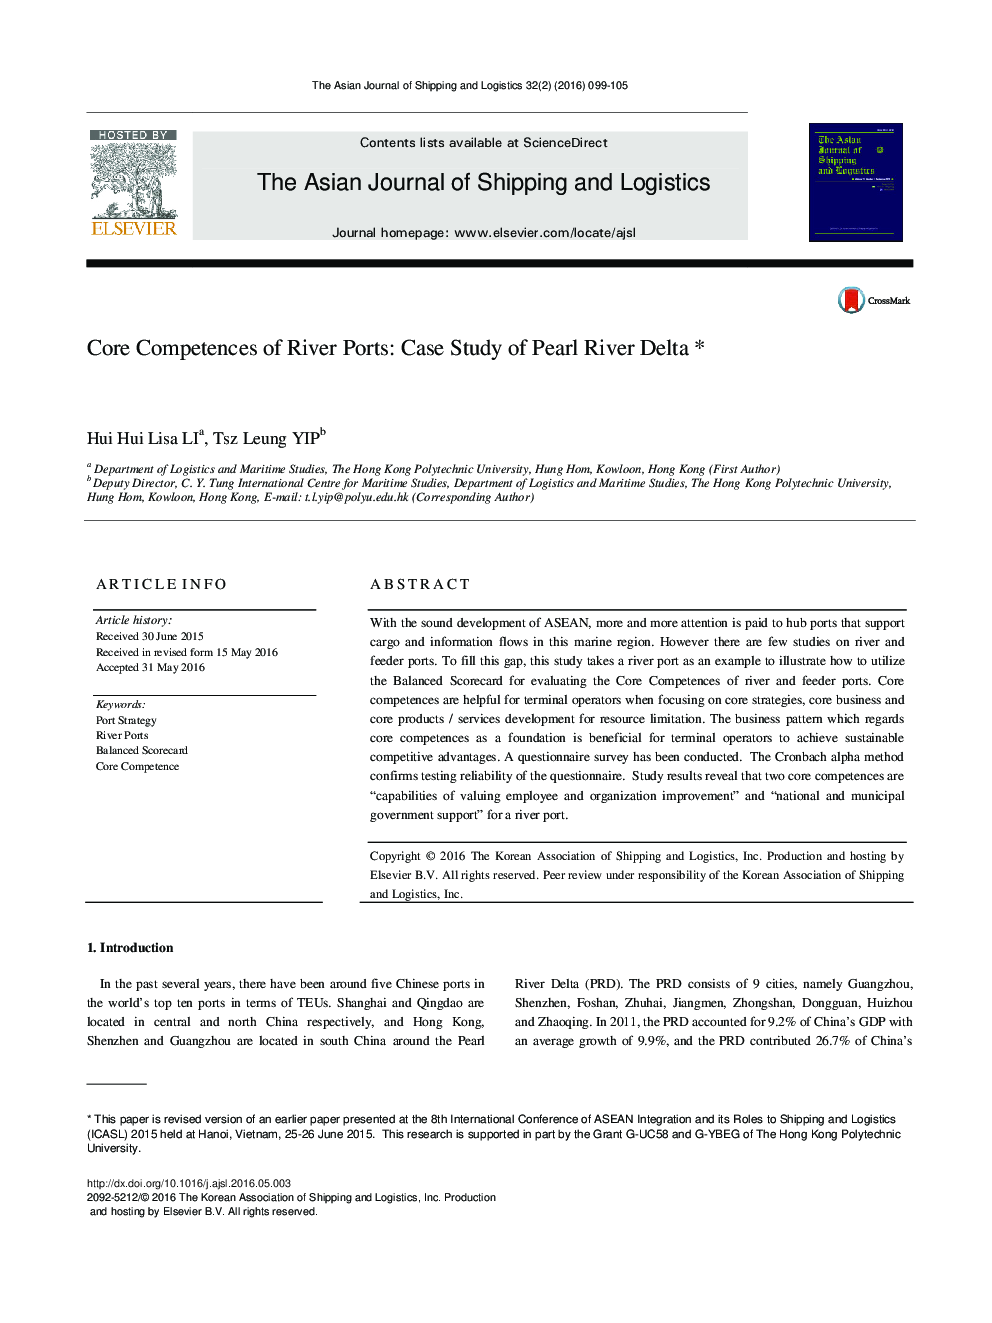 Core Competences of River Ports: Case Study of Pearl River Delta 